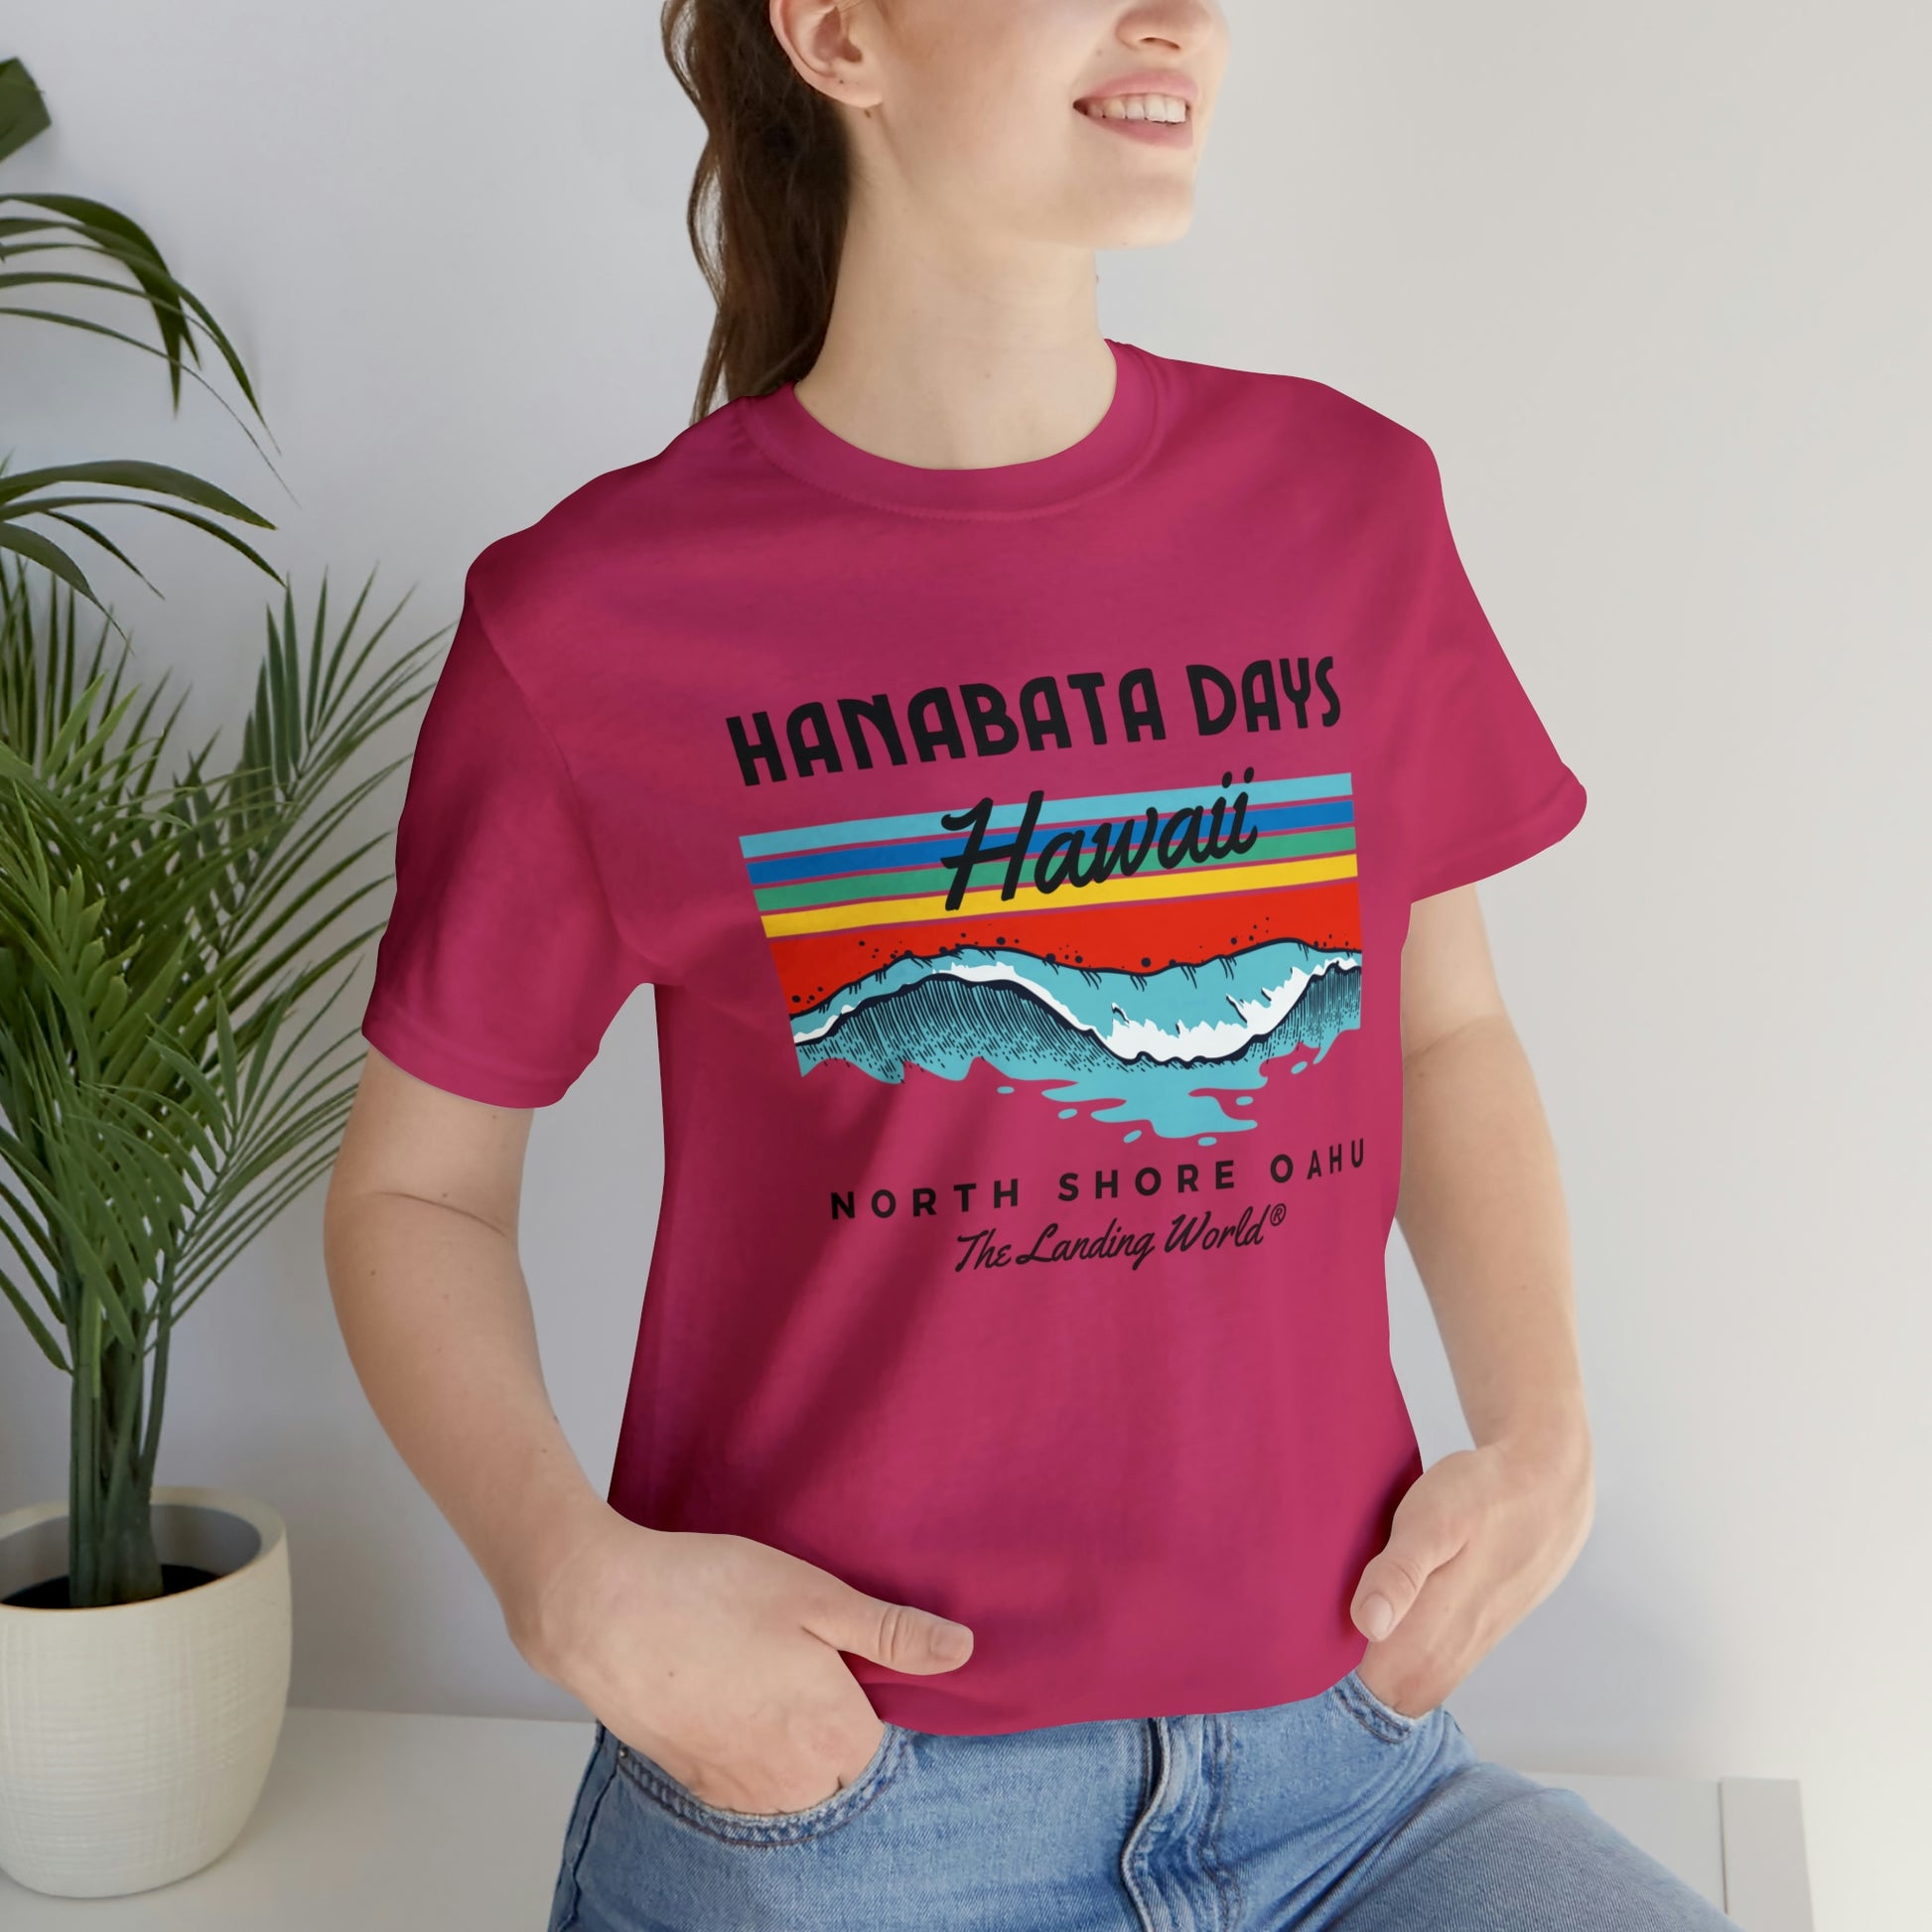 Hanabata Days Shirt, Hawaii North Shore Shirt, Unisex Hanabata Days T-Shirt